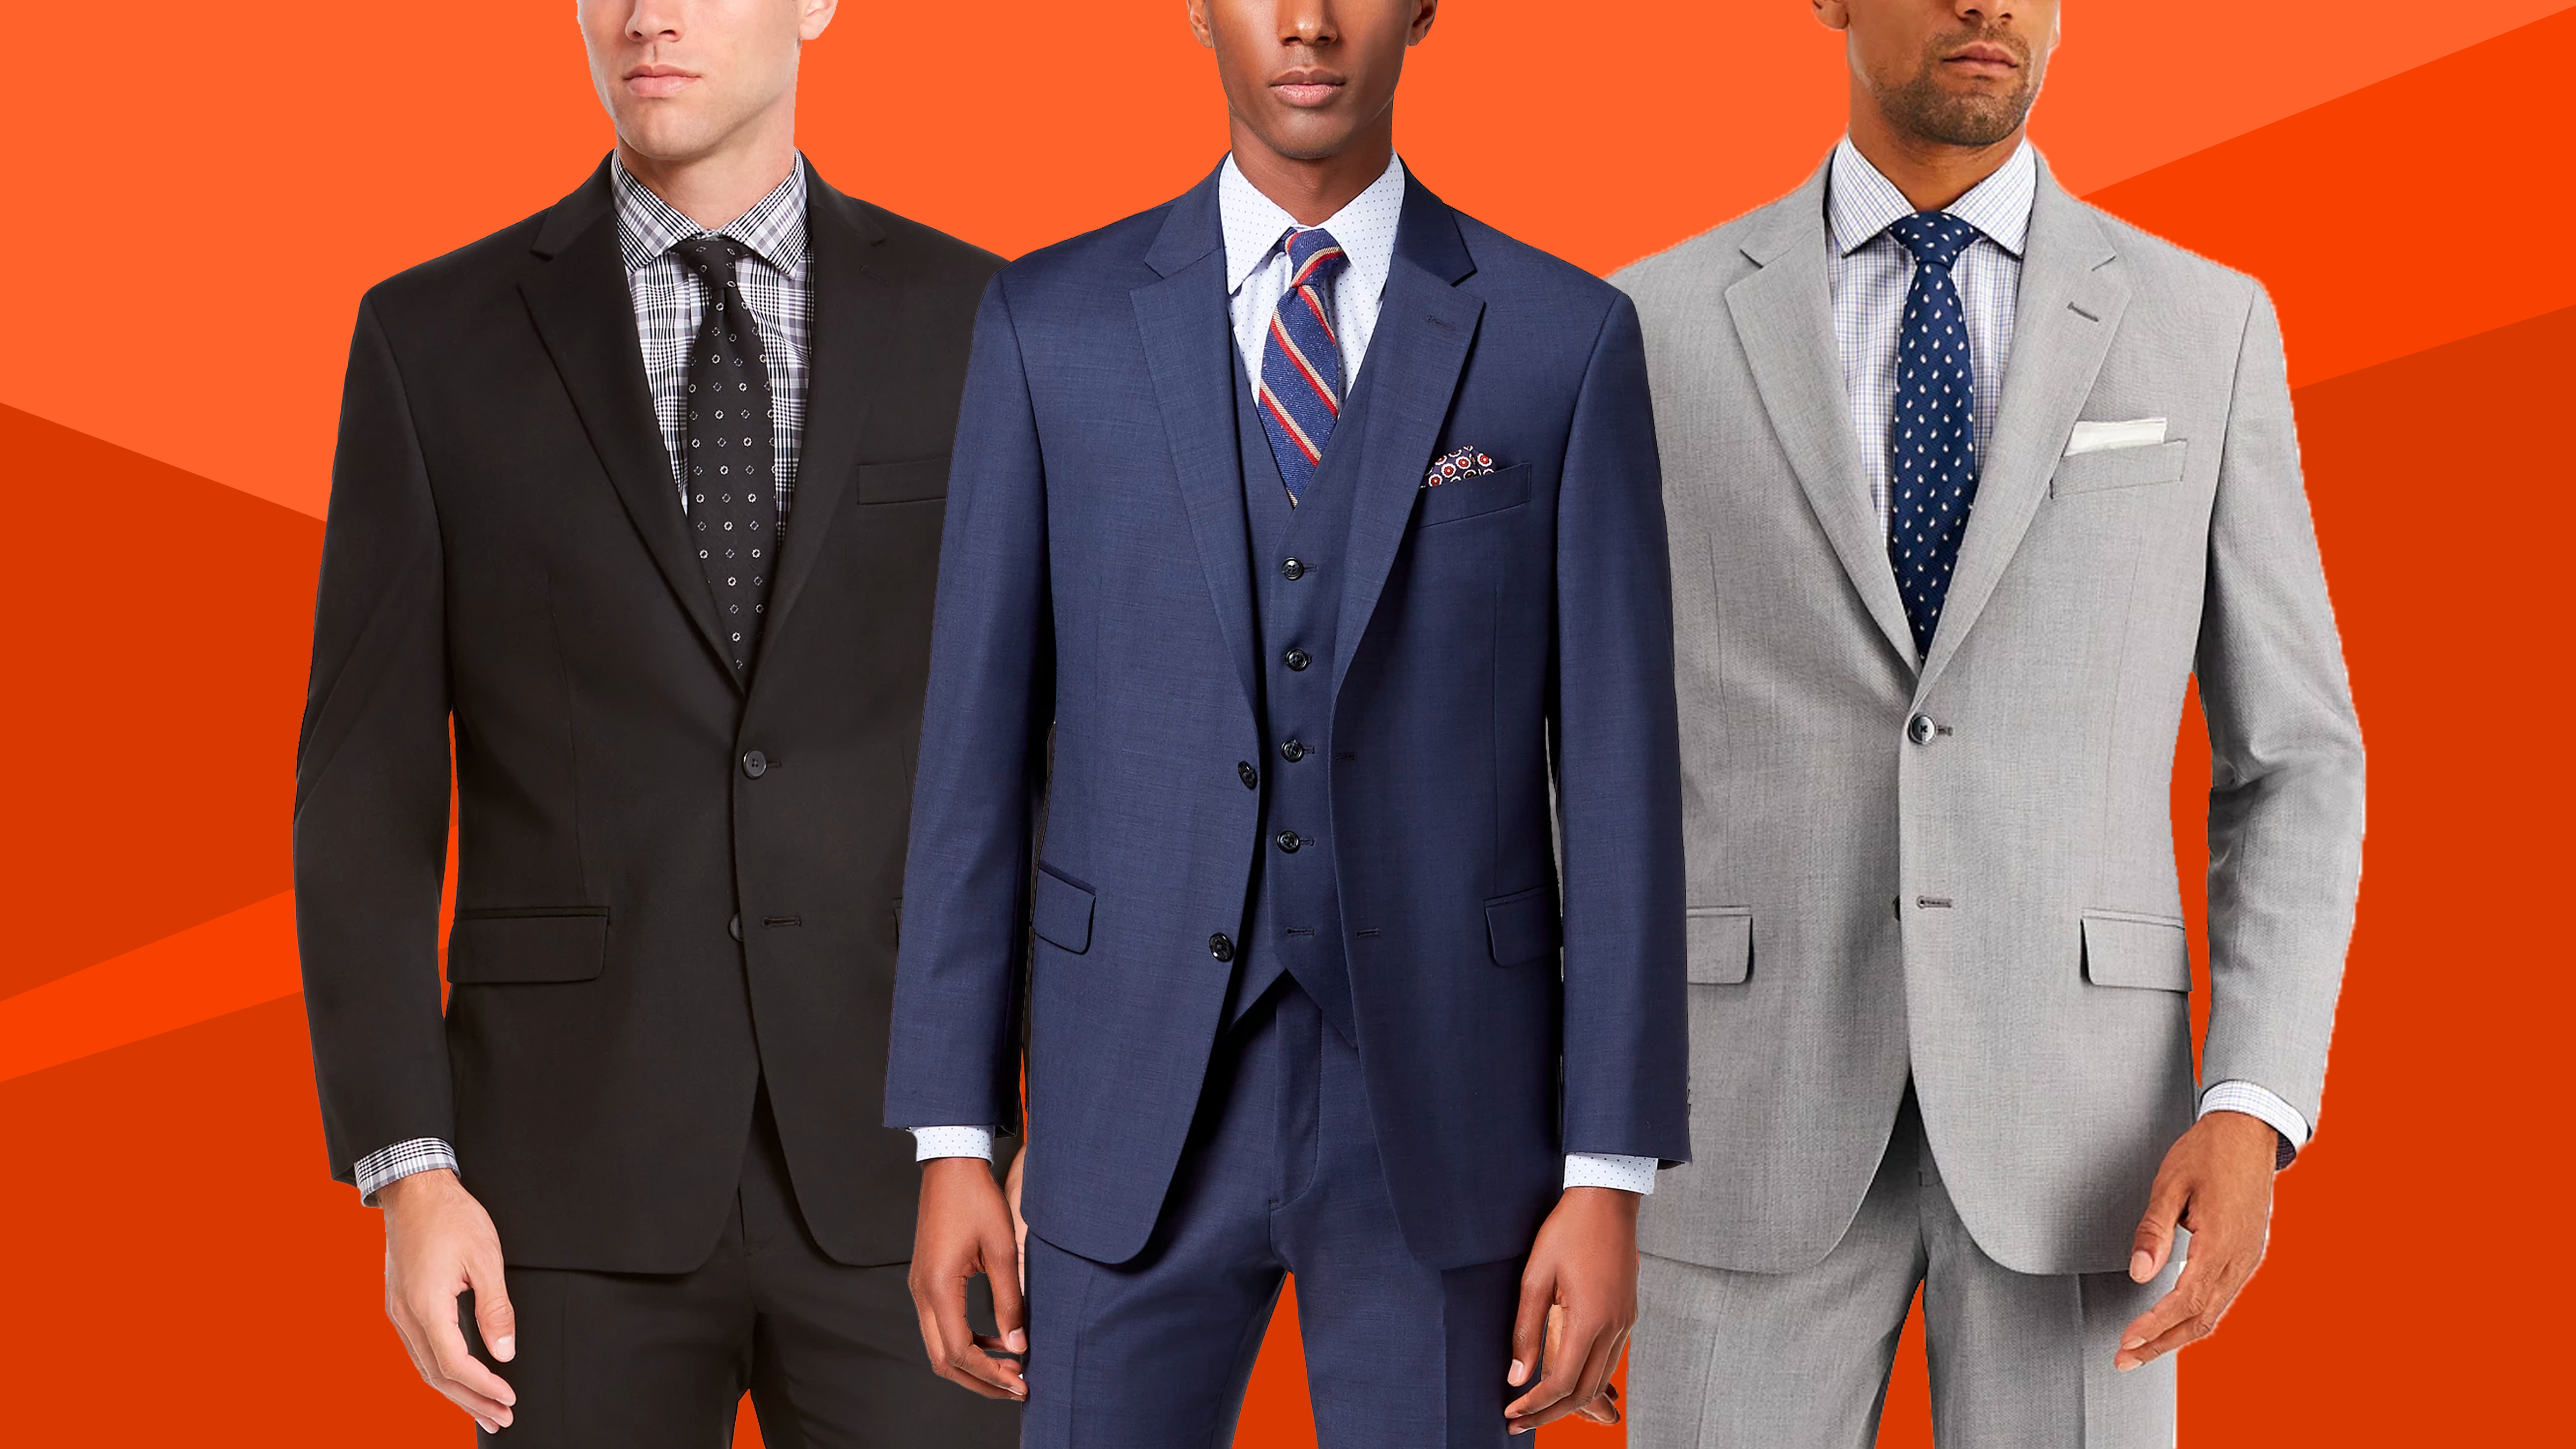 Macy's: Save big on men's suits ahead of wedding season 2022